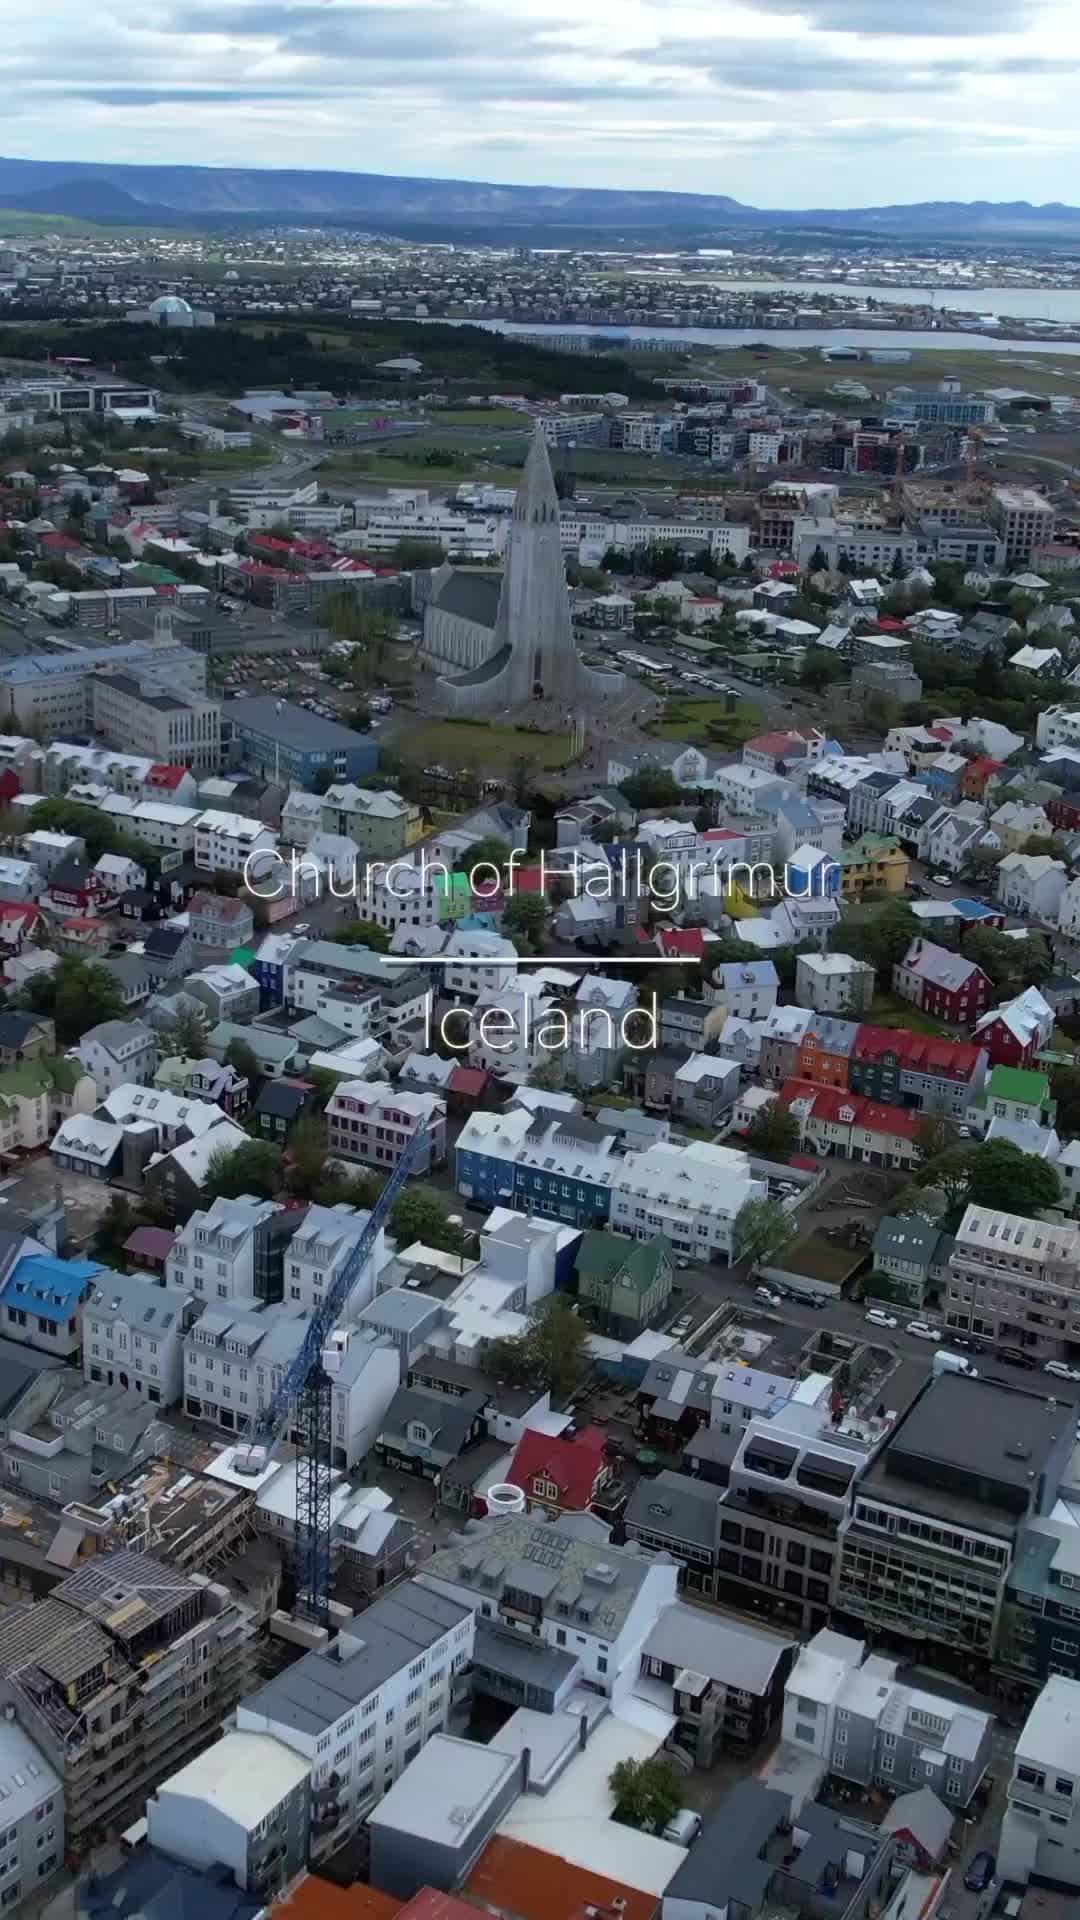 Explore Hallgrímur Church: Iceland's Architectural Marvel